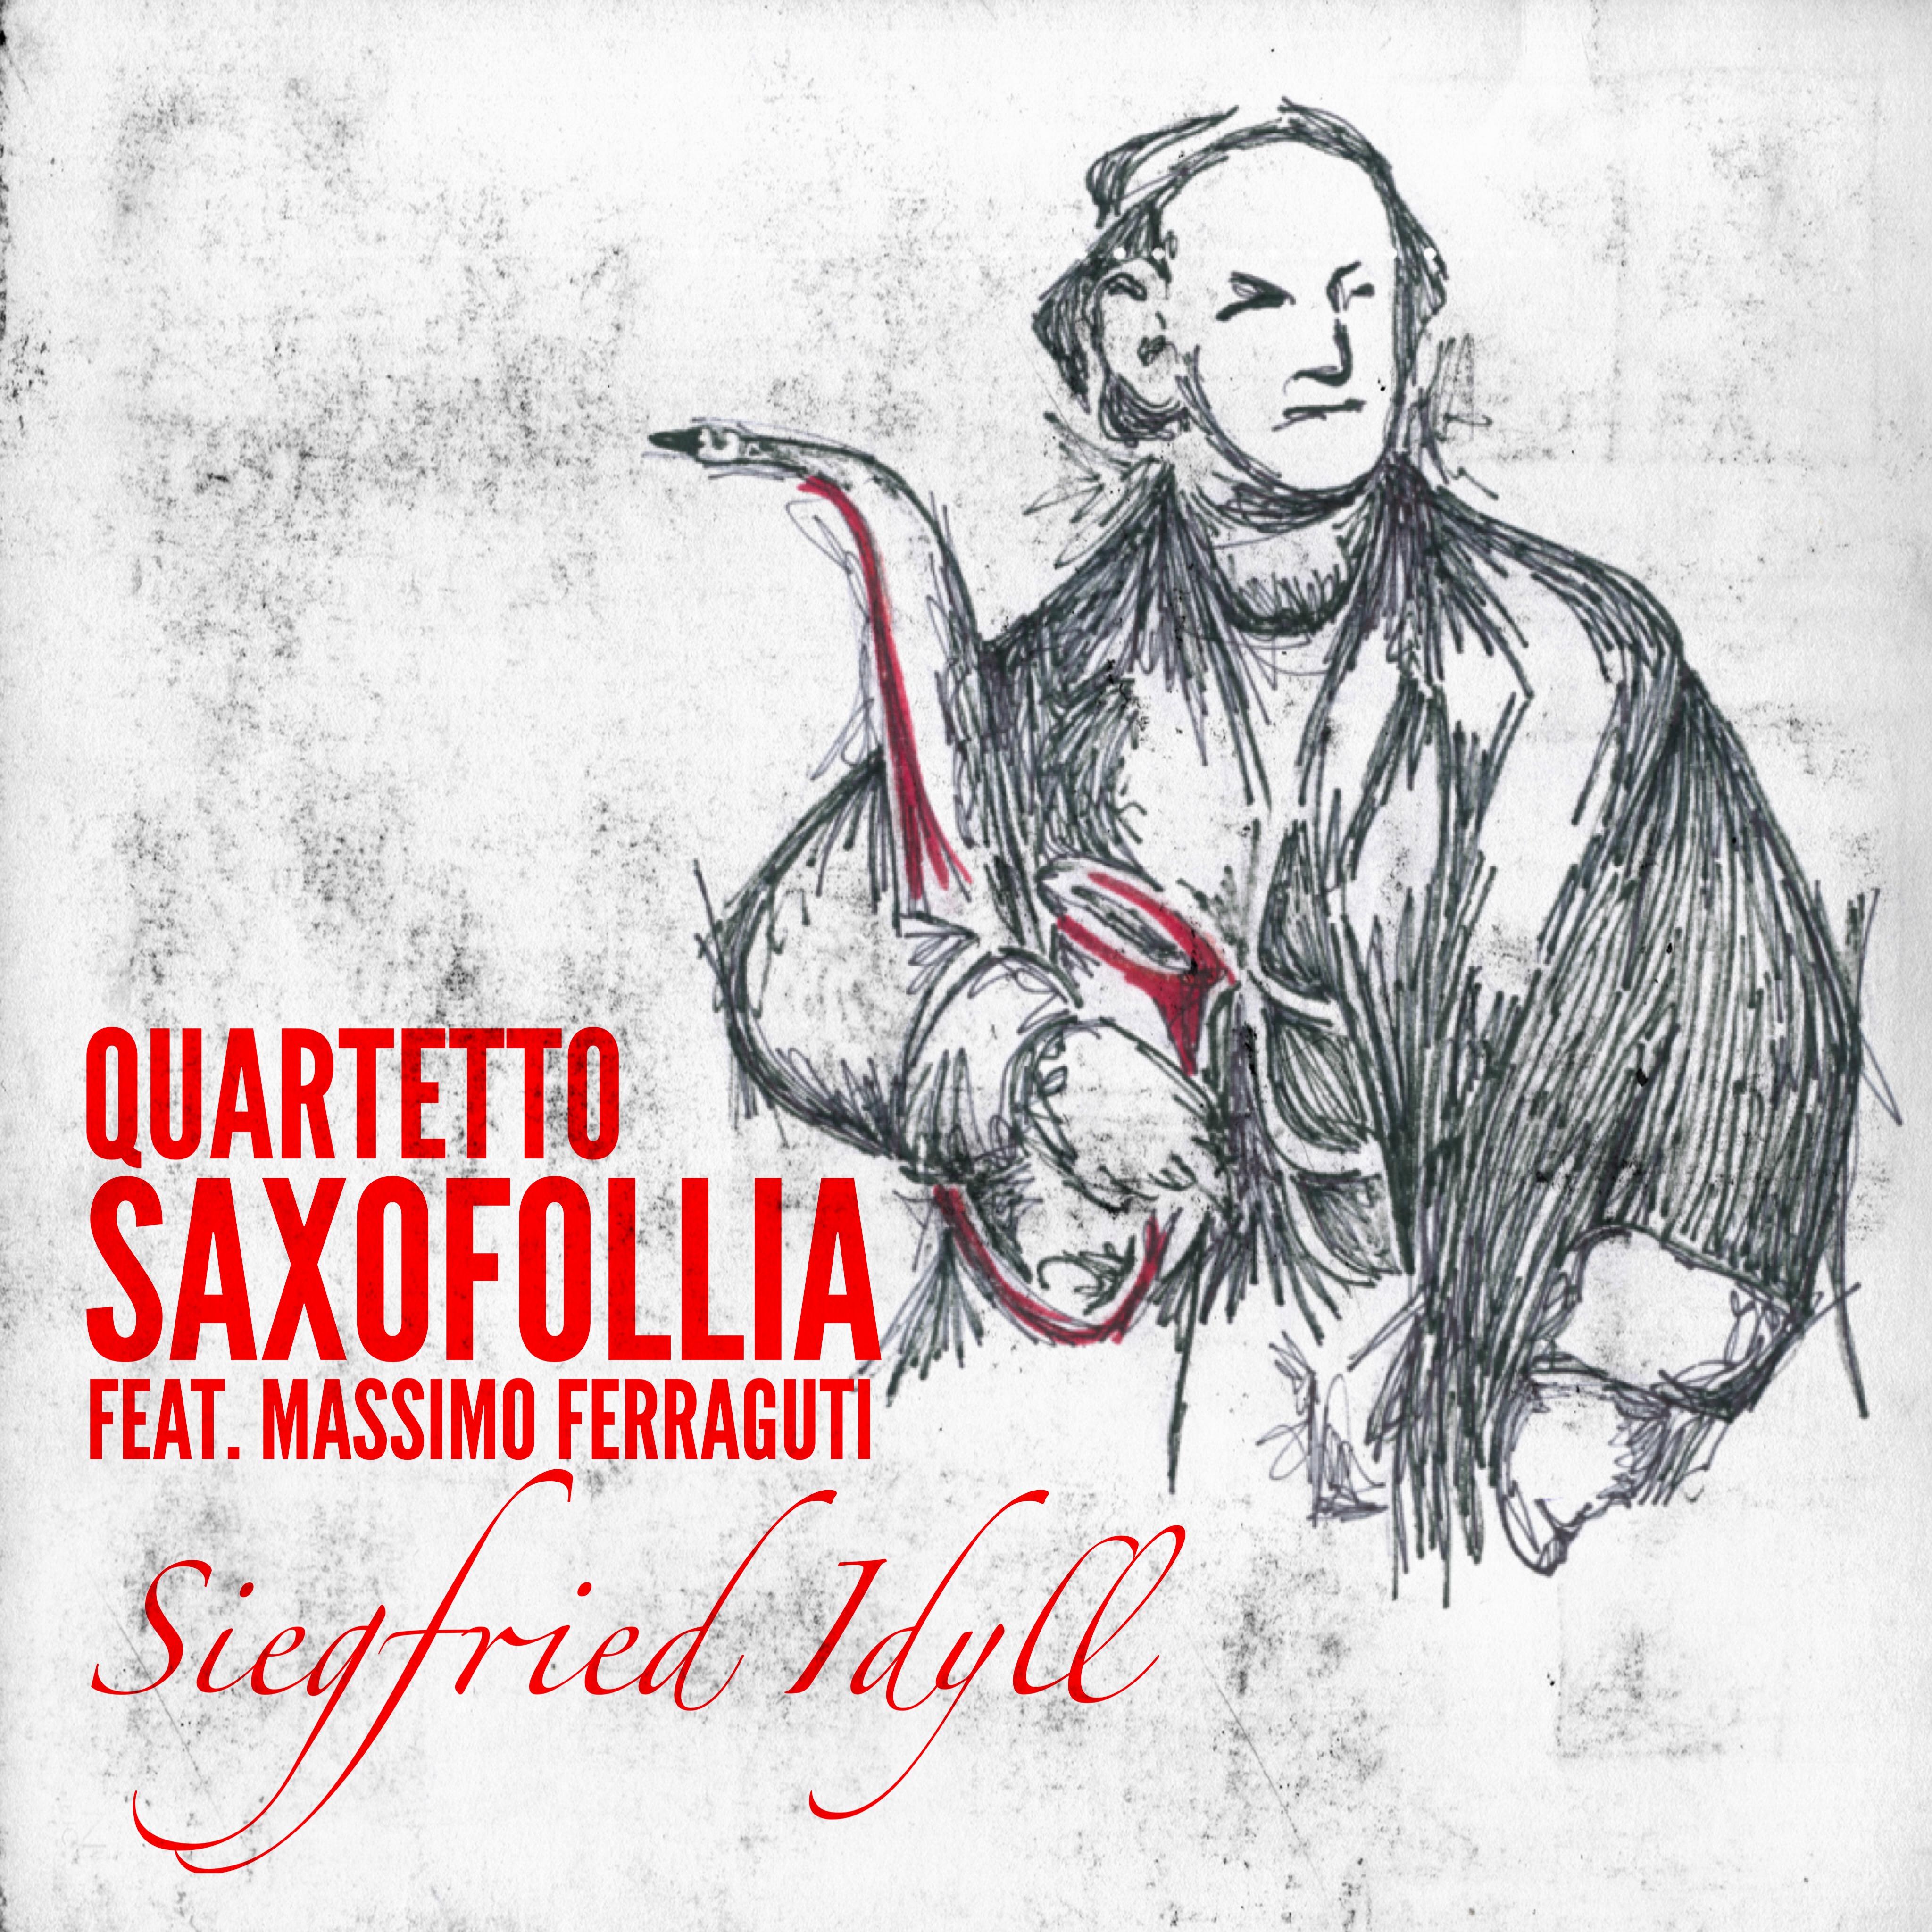 Saxofollia Siegfried Idyll